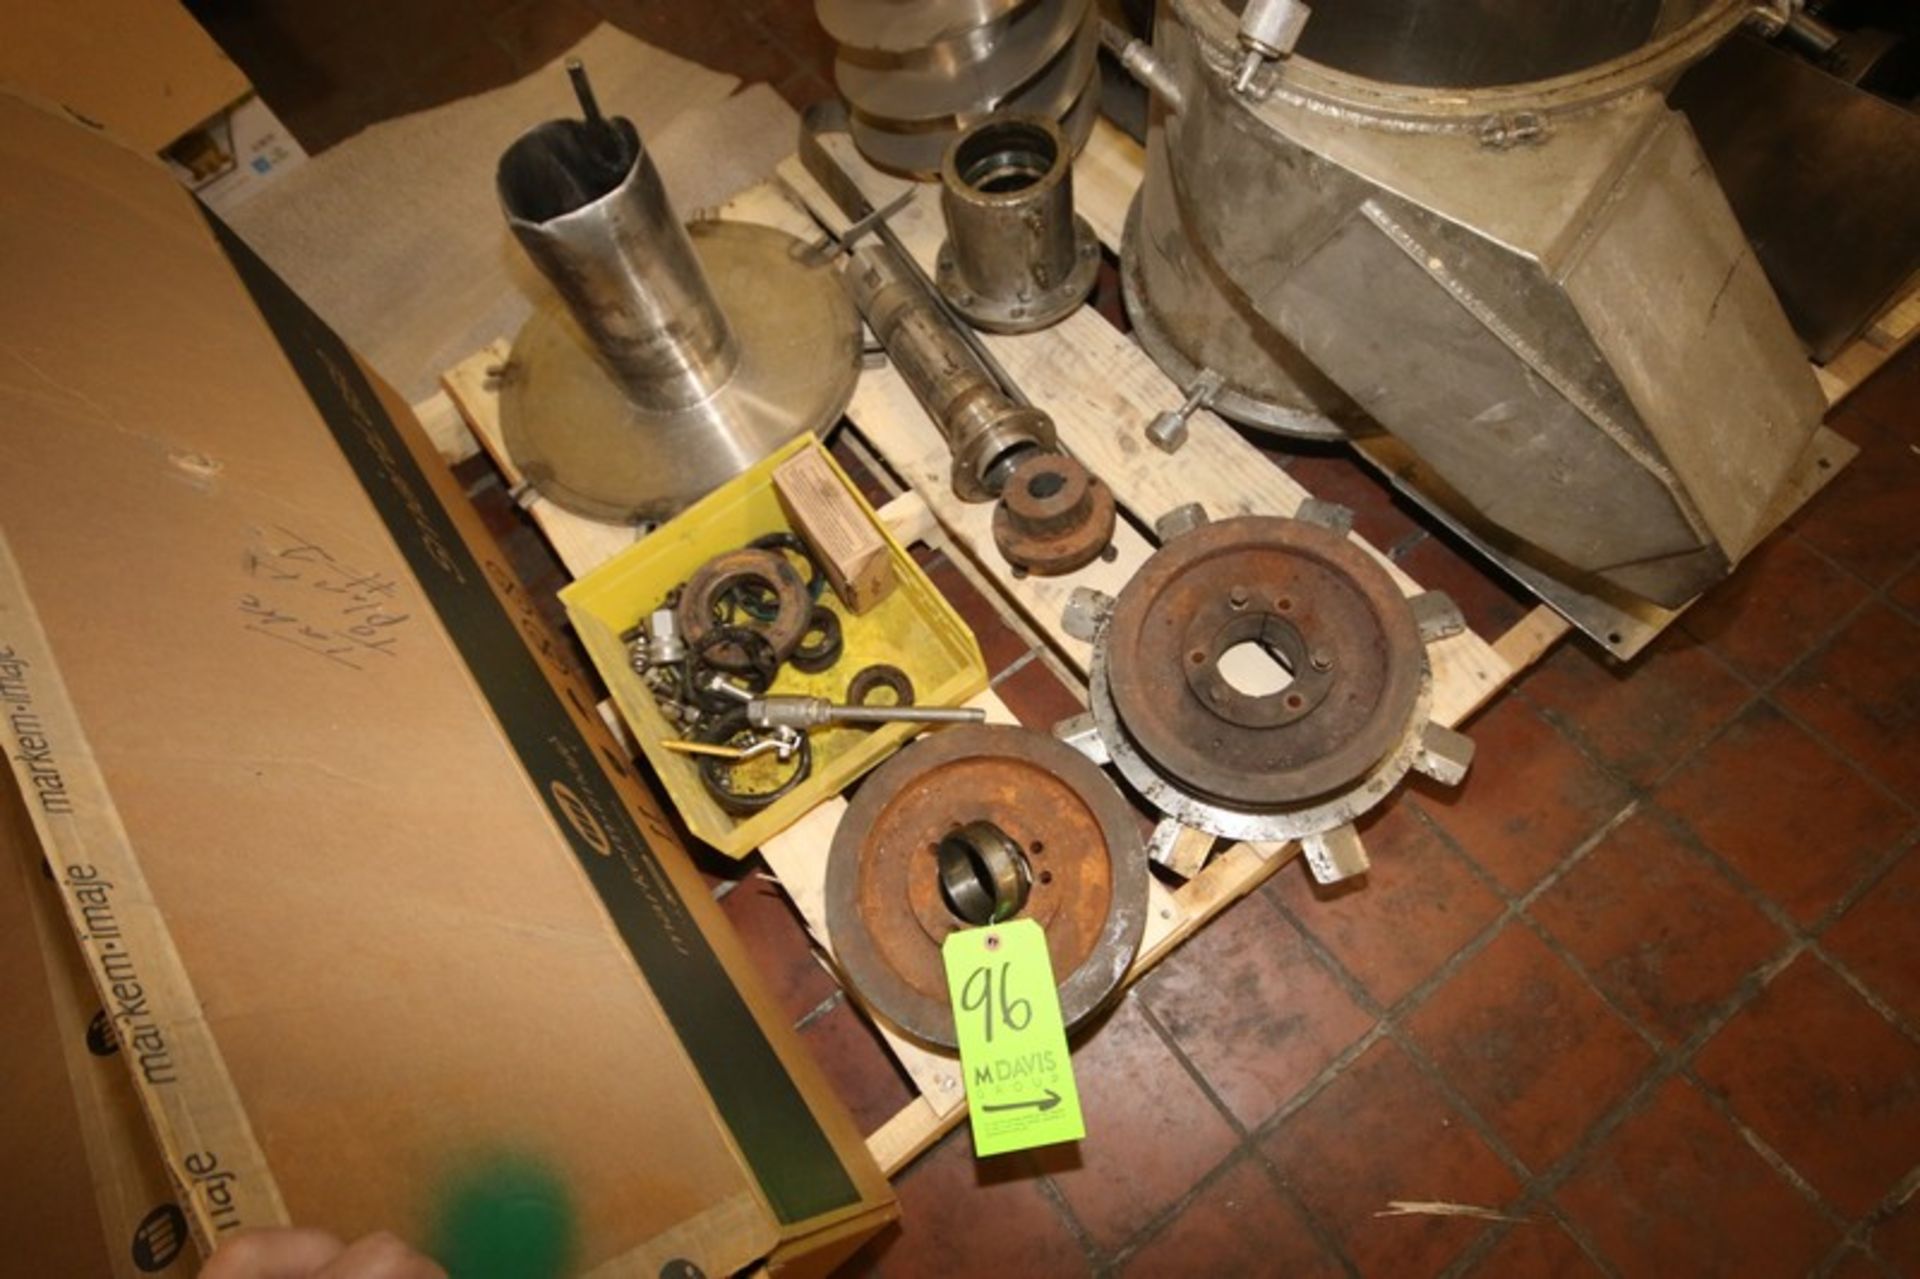 Lot of Assorted Urschel Shredder Parts, with S/S Frame & Motor, with Assorted Shredder Blades, with - Image 5 of 12